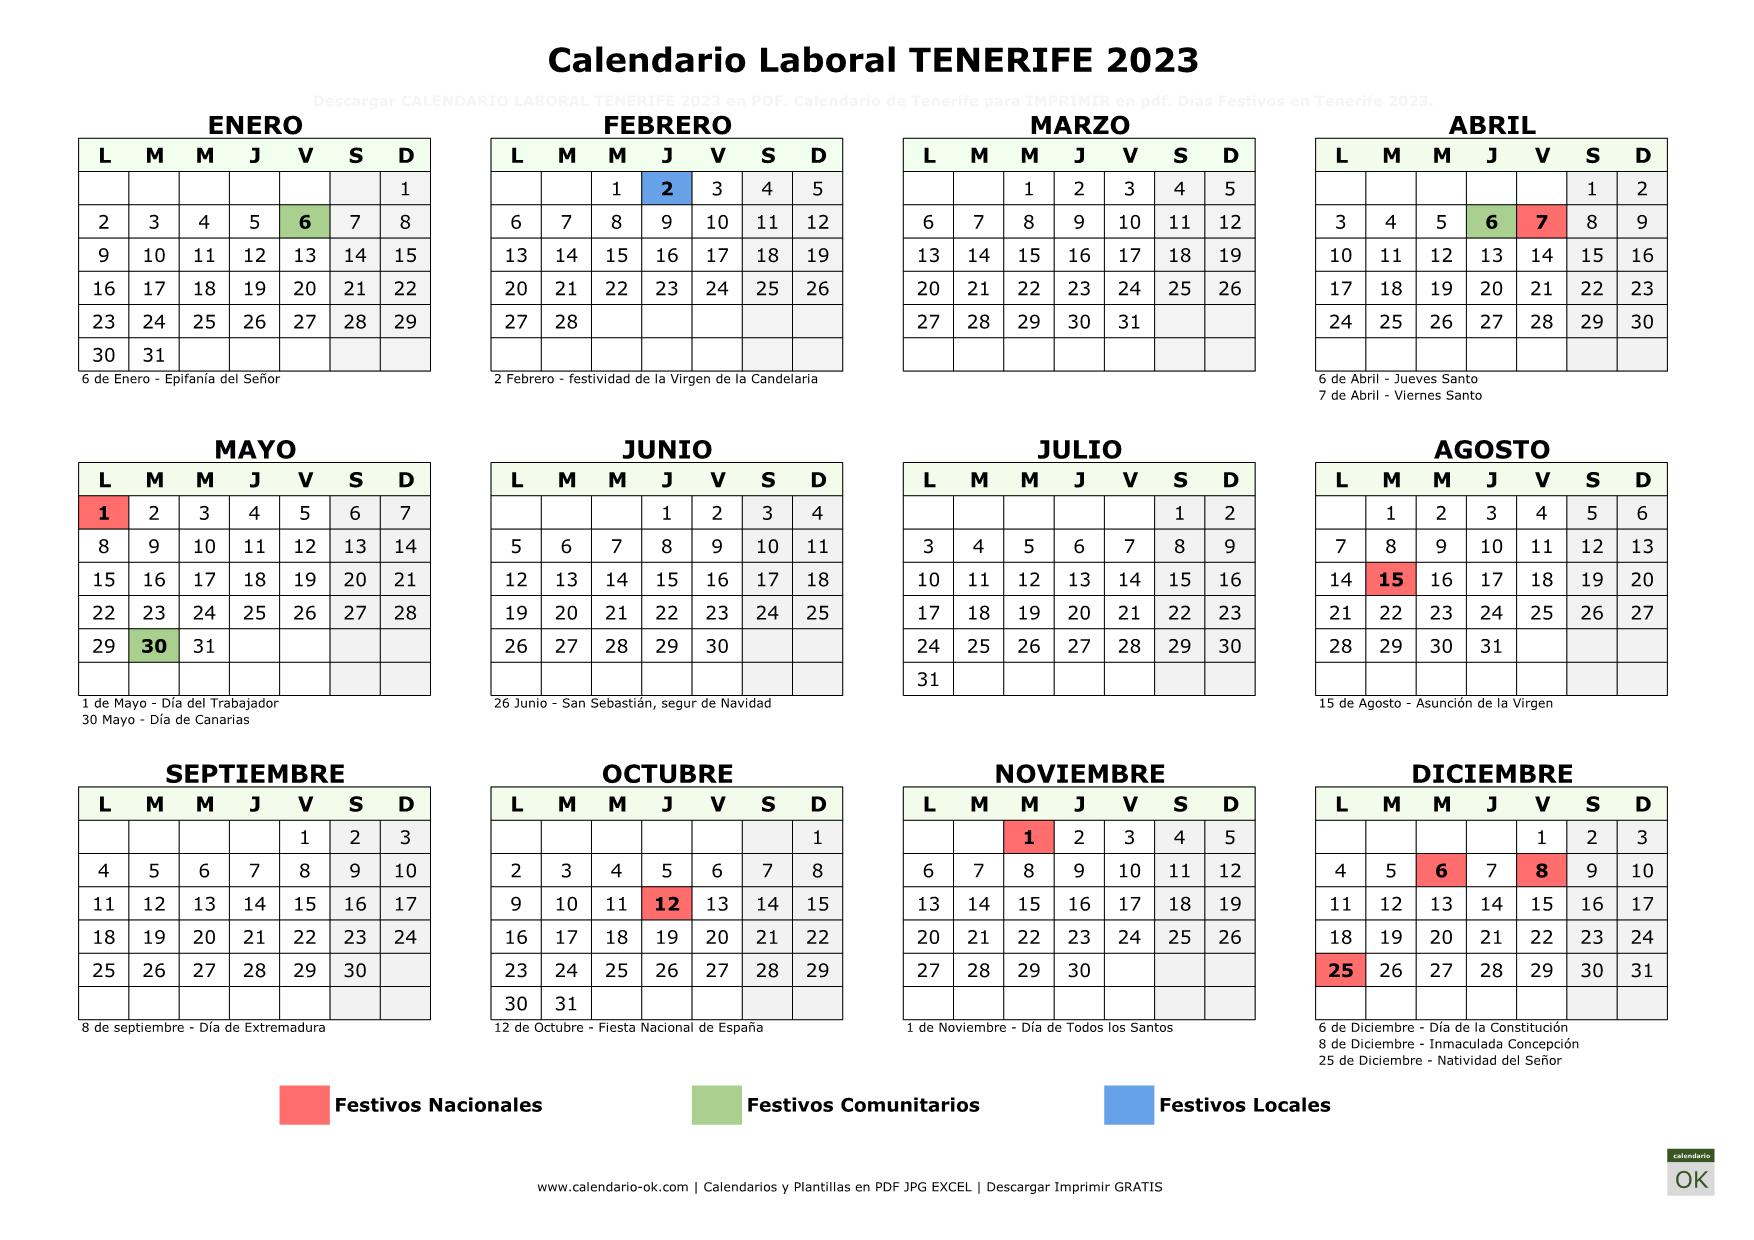 Calendario Laboral Tenerife 2023 horizontal